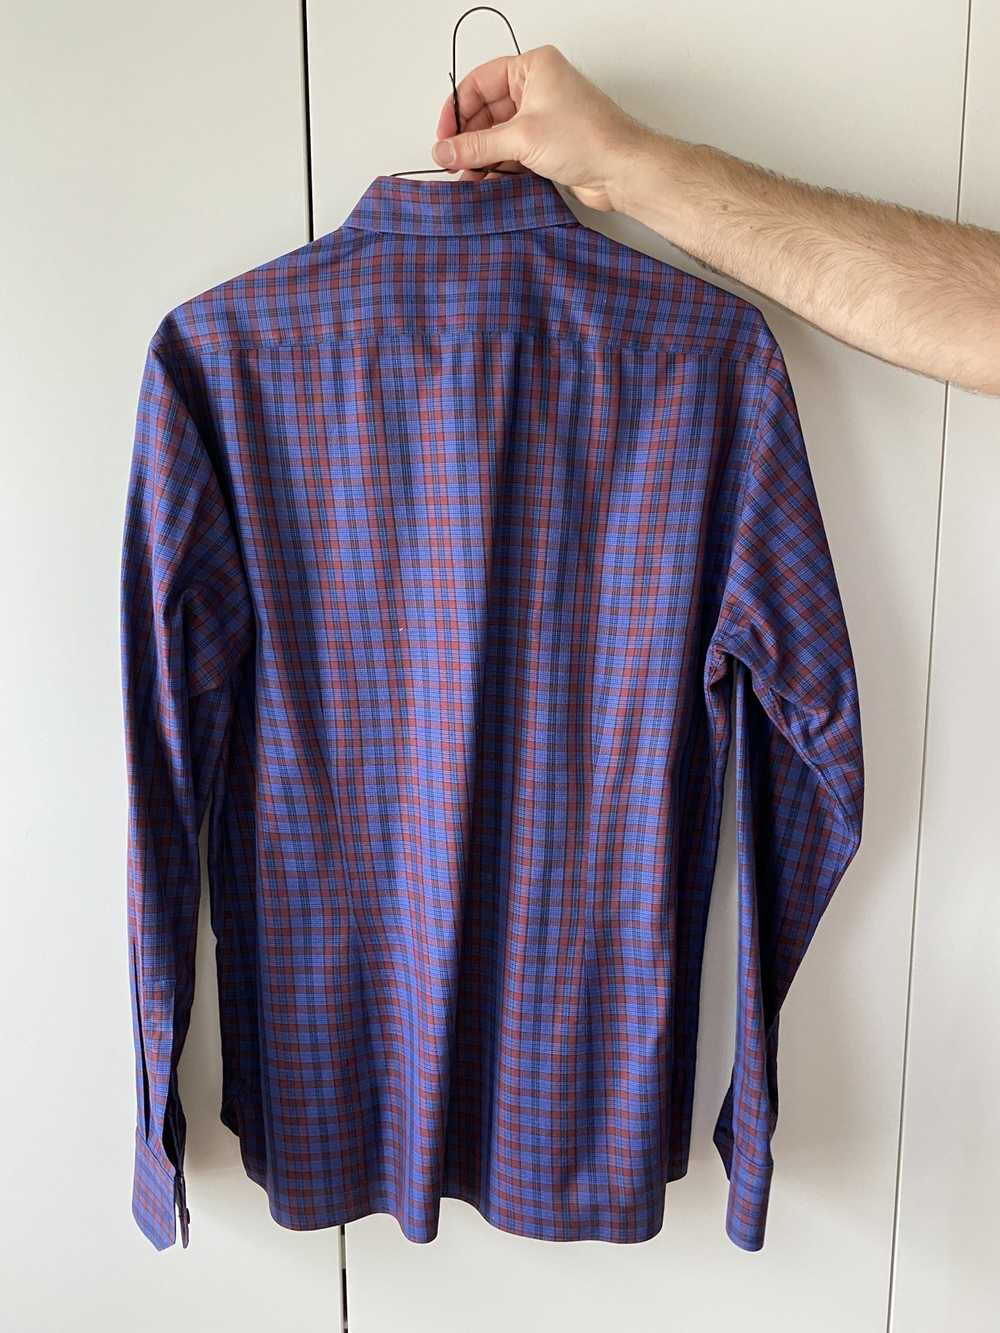 Lanvin Dress Shirt - image 2